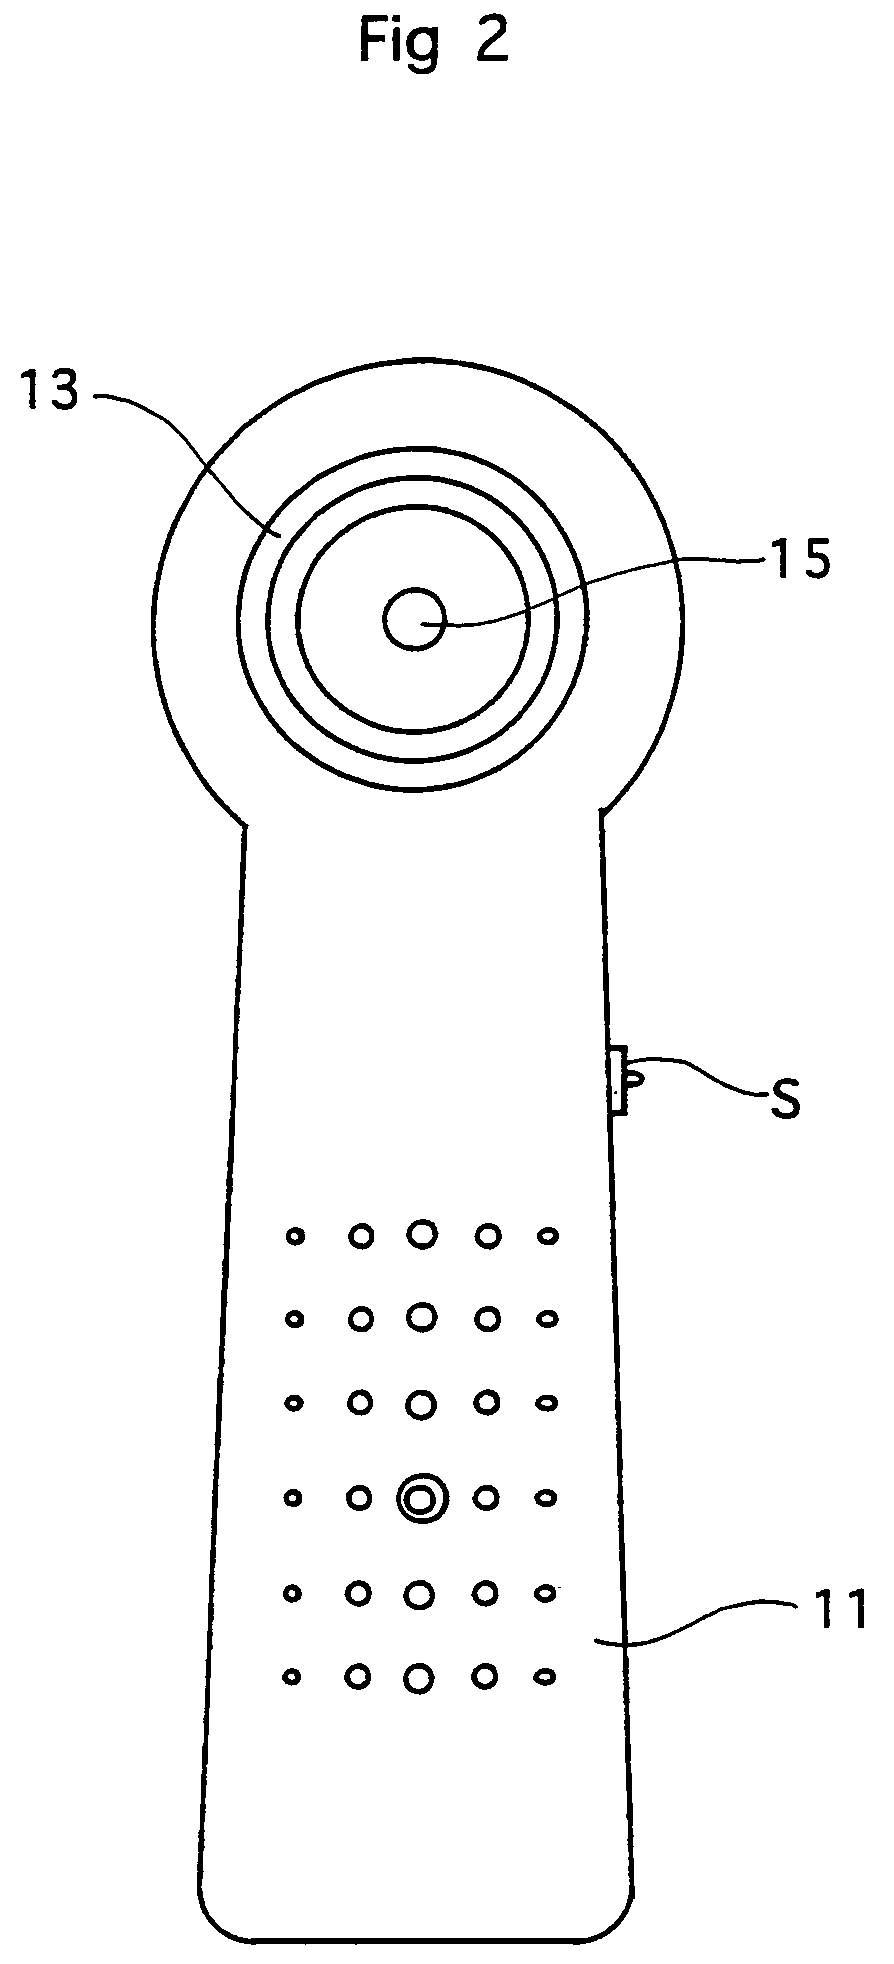 Apparatus for laser depilation